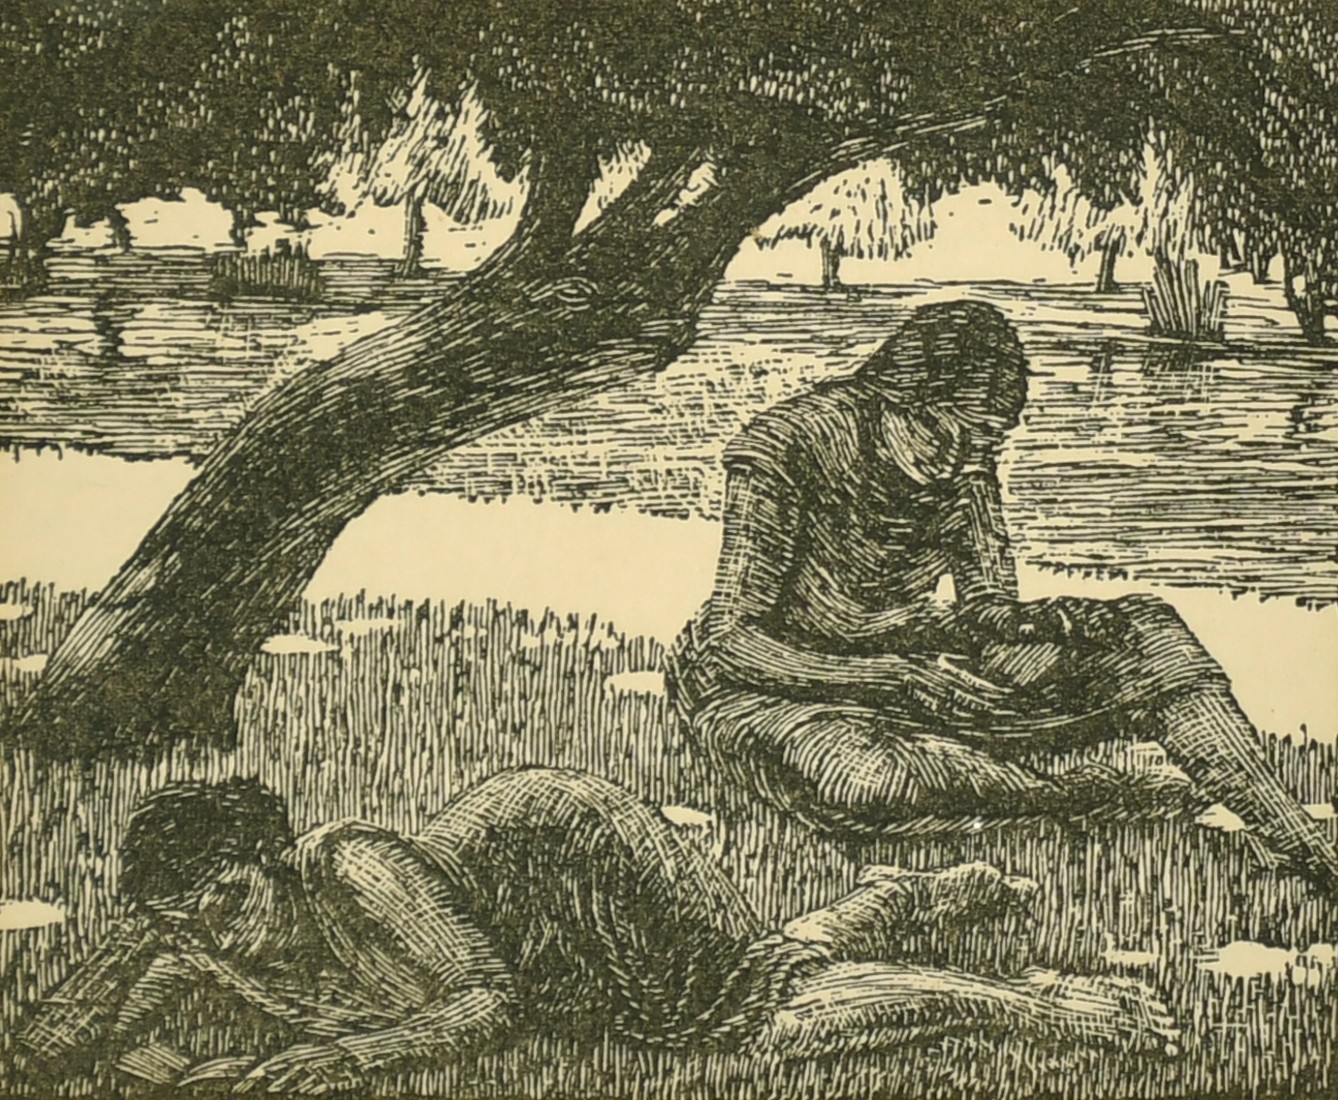 Gwen Raverat (1885-1957), The riverbank (1932), woodcut published by Mercury Press, 3.5" x 4".